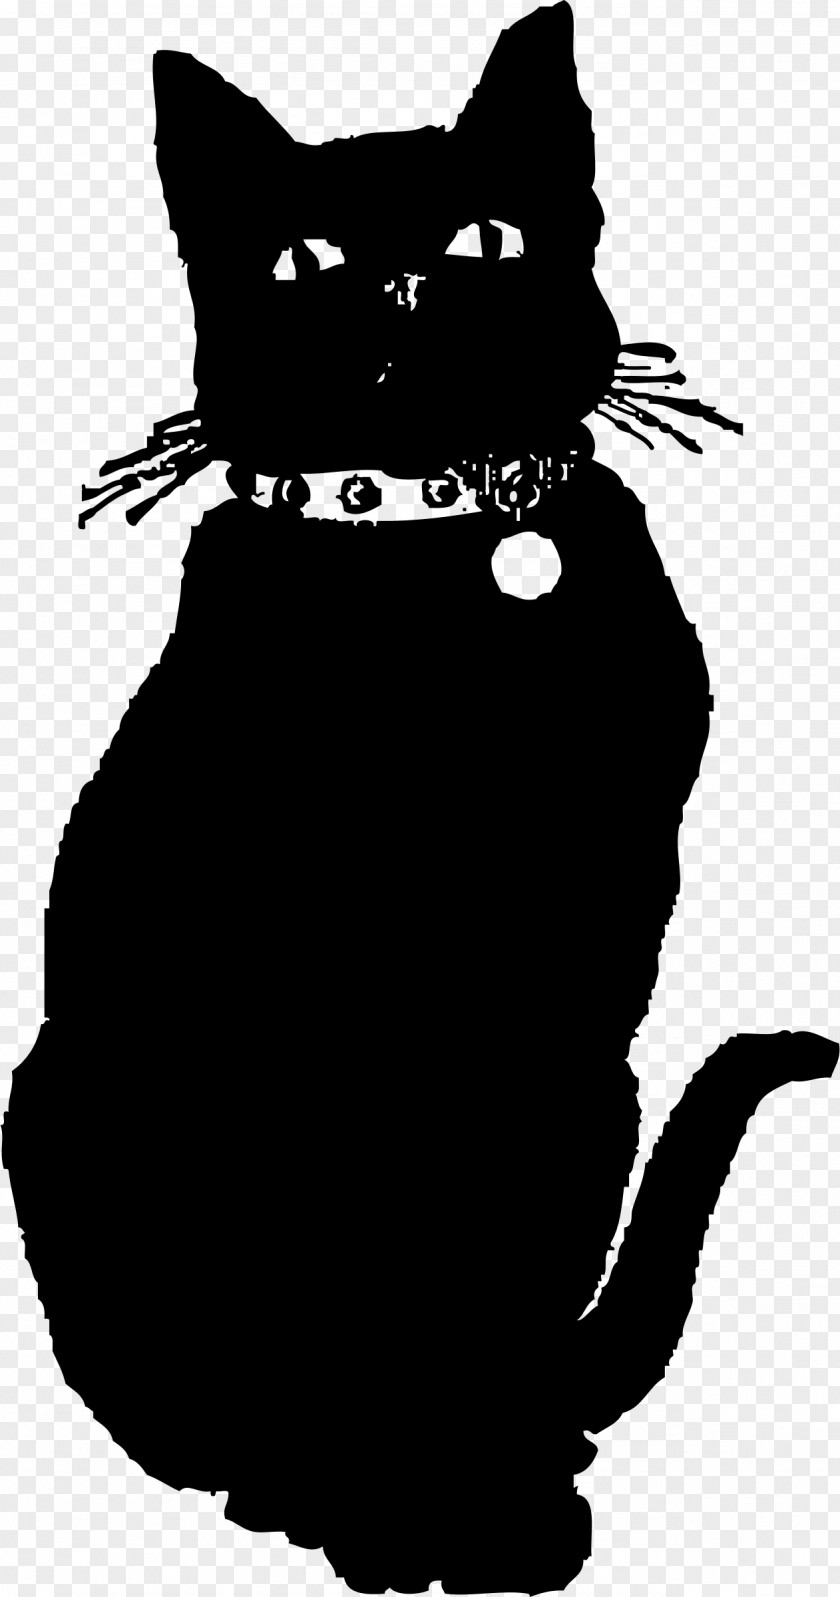 Black Cat Kitten Clip Art PNG